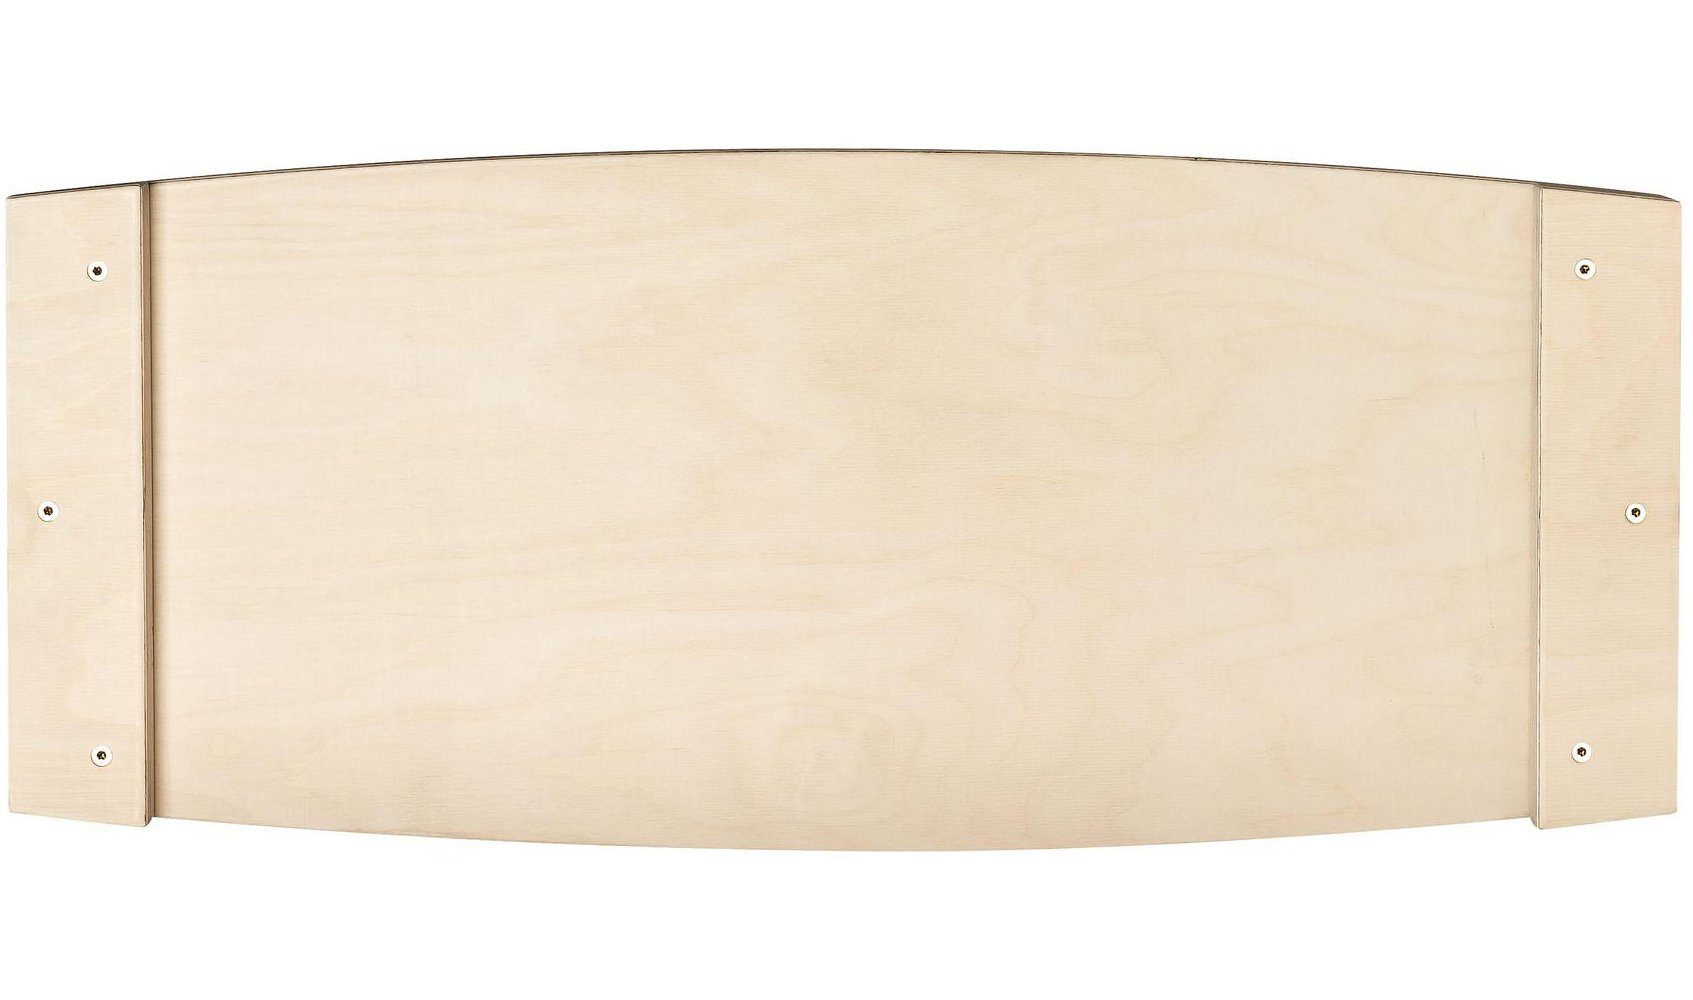 Kork-Deko.de Balanceboard aus (45x10cm) Korkrolle Birkenholz als Rutschschutz Korkpads & mit